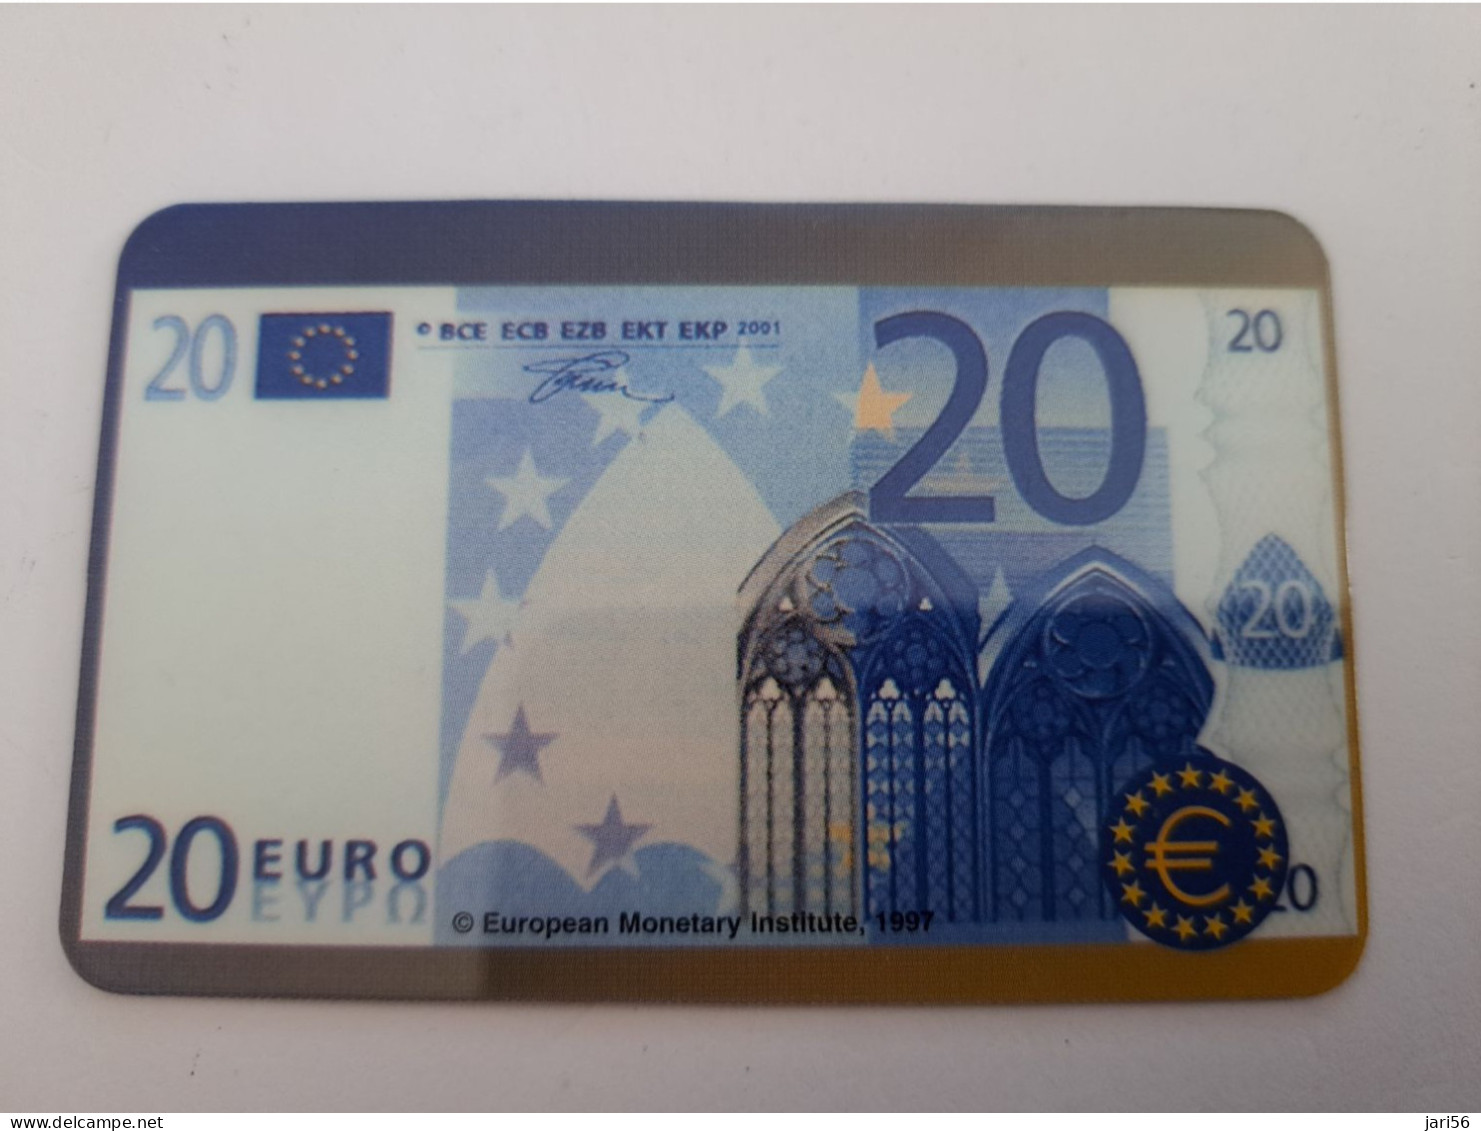 GREAT BRITAIN   20 UNITS   / EURO COINS/ BILJET 20  EURO    (date NOVEMBER 1998)  PREPAID CARD / MINT      **14832** - Verzamelingen